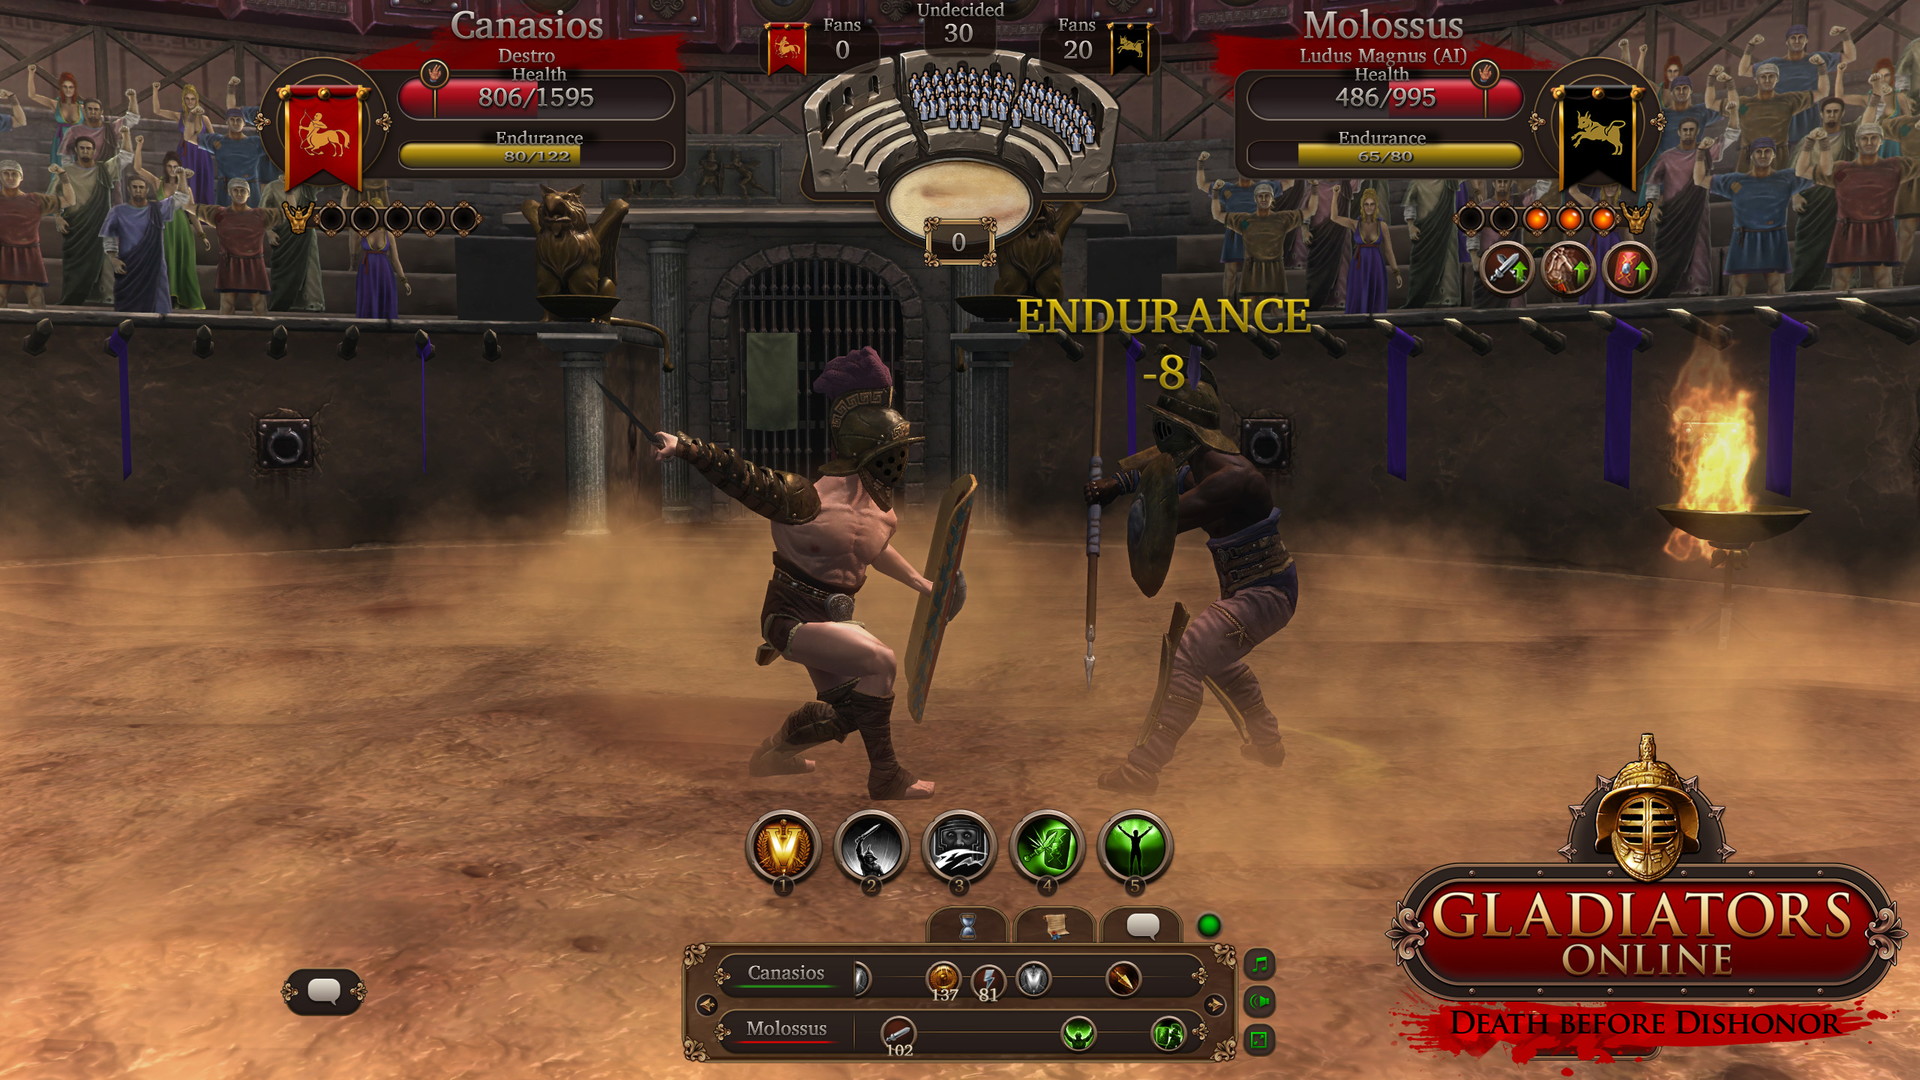 Gladiators Online: Death Before Dishonor - screenshot 12